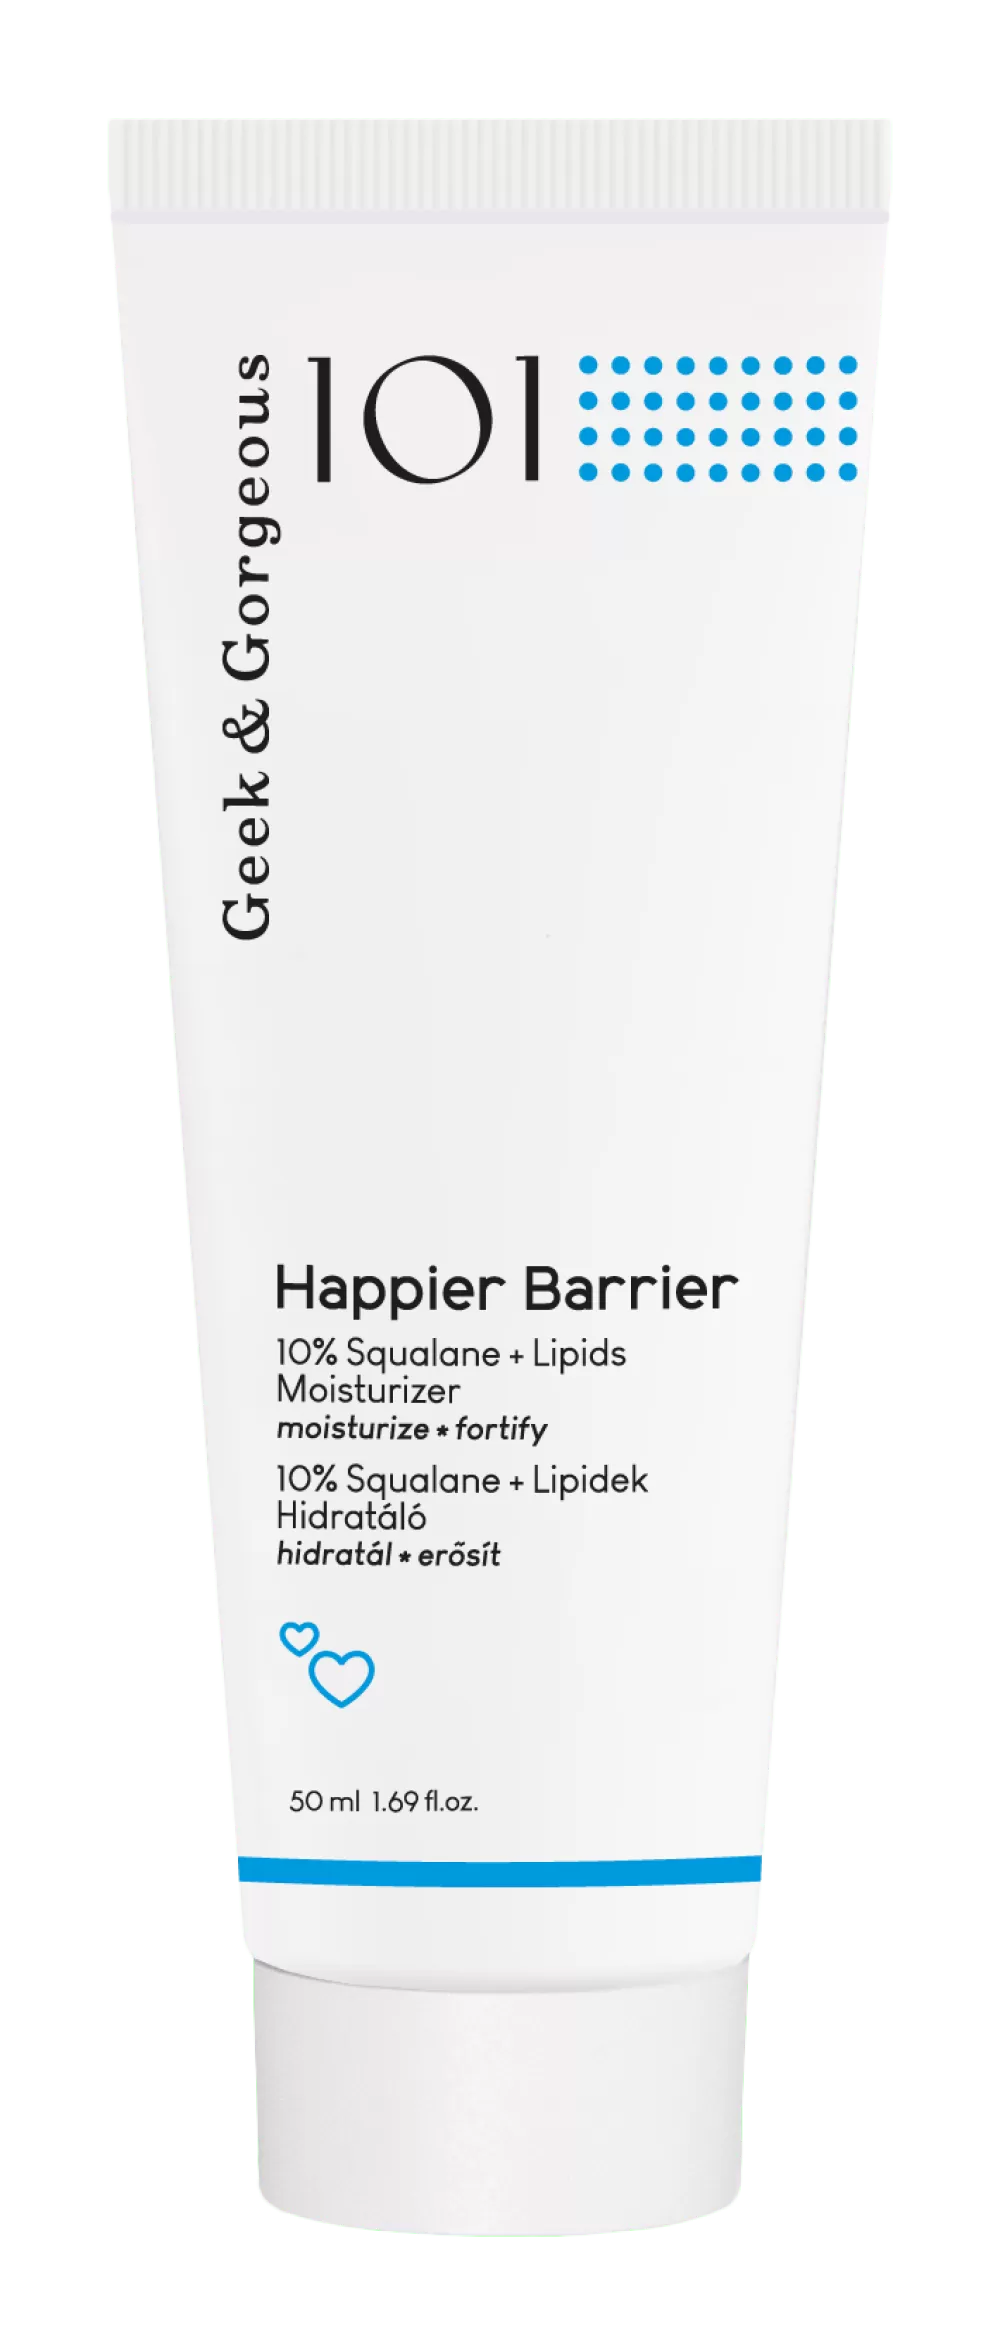 Crema hidratanta Happier Barrier 10% Squalan+ Lipide, 50 ml, Geek&Gorgeous